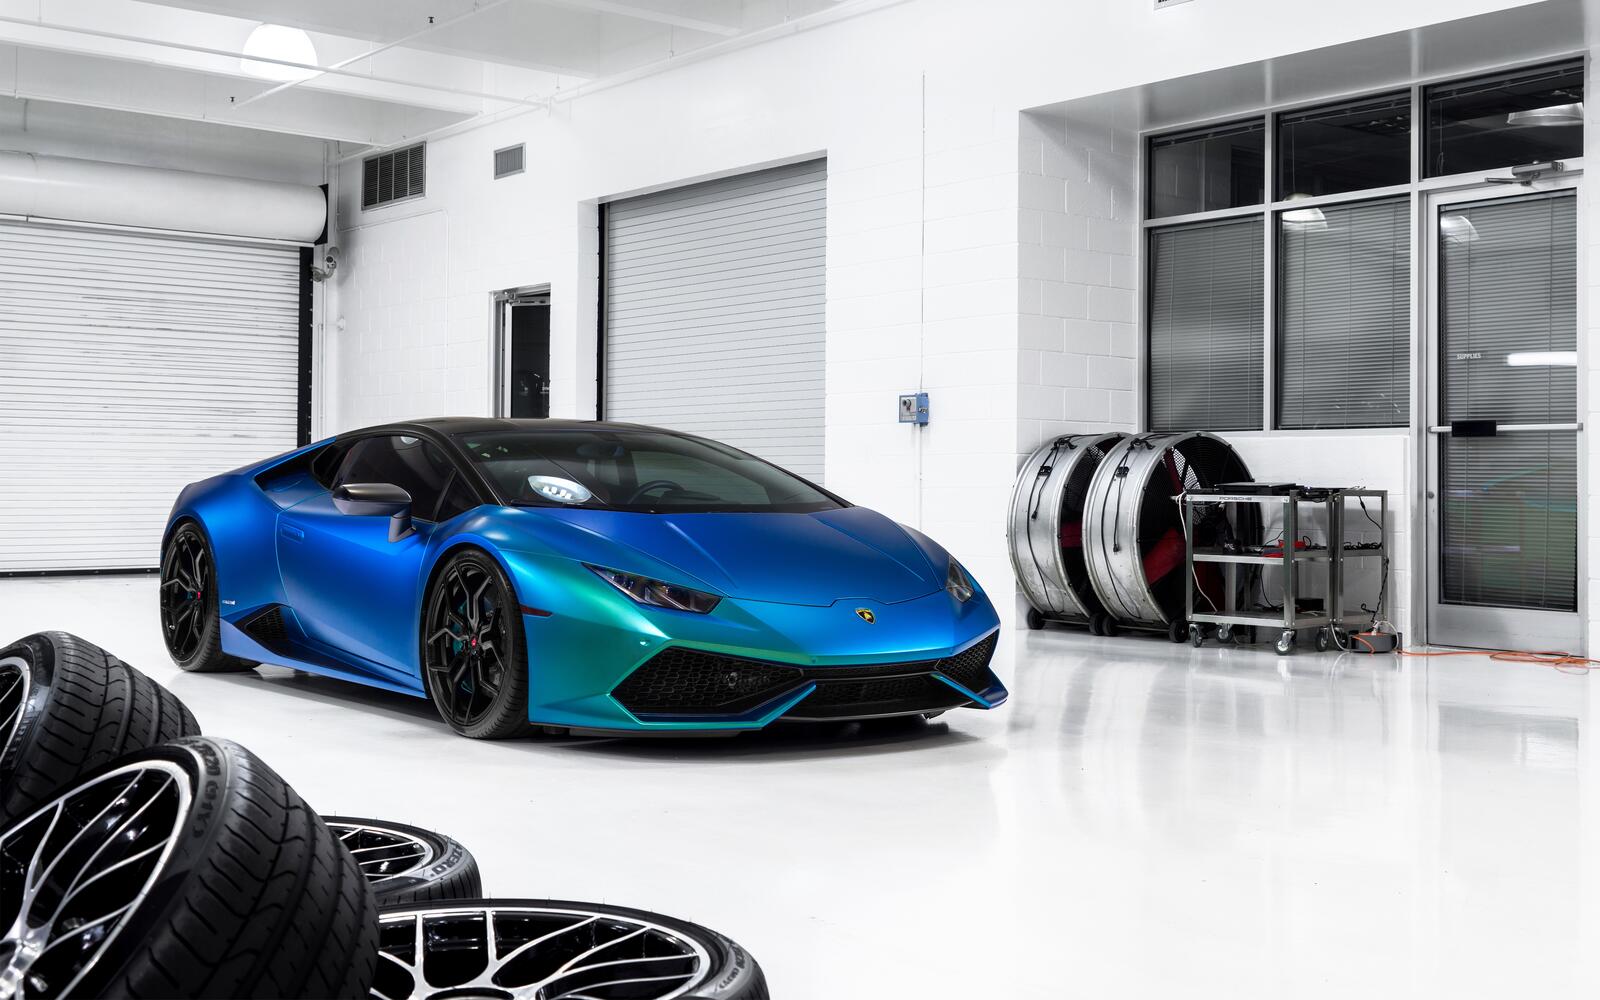 Free photo Blue Lamborghini Huracan standing in a light-colored garage